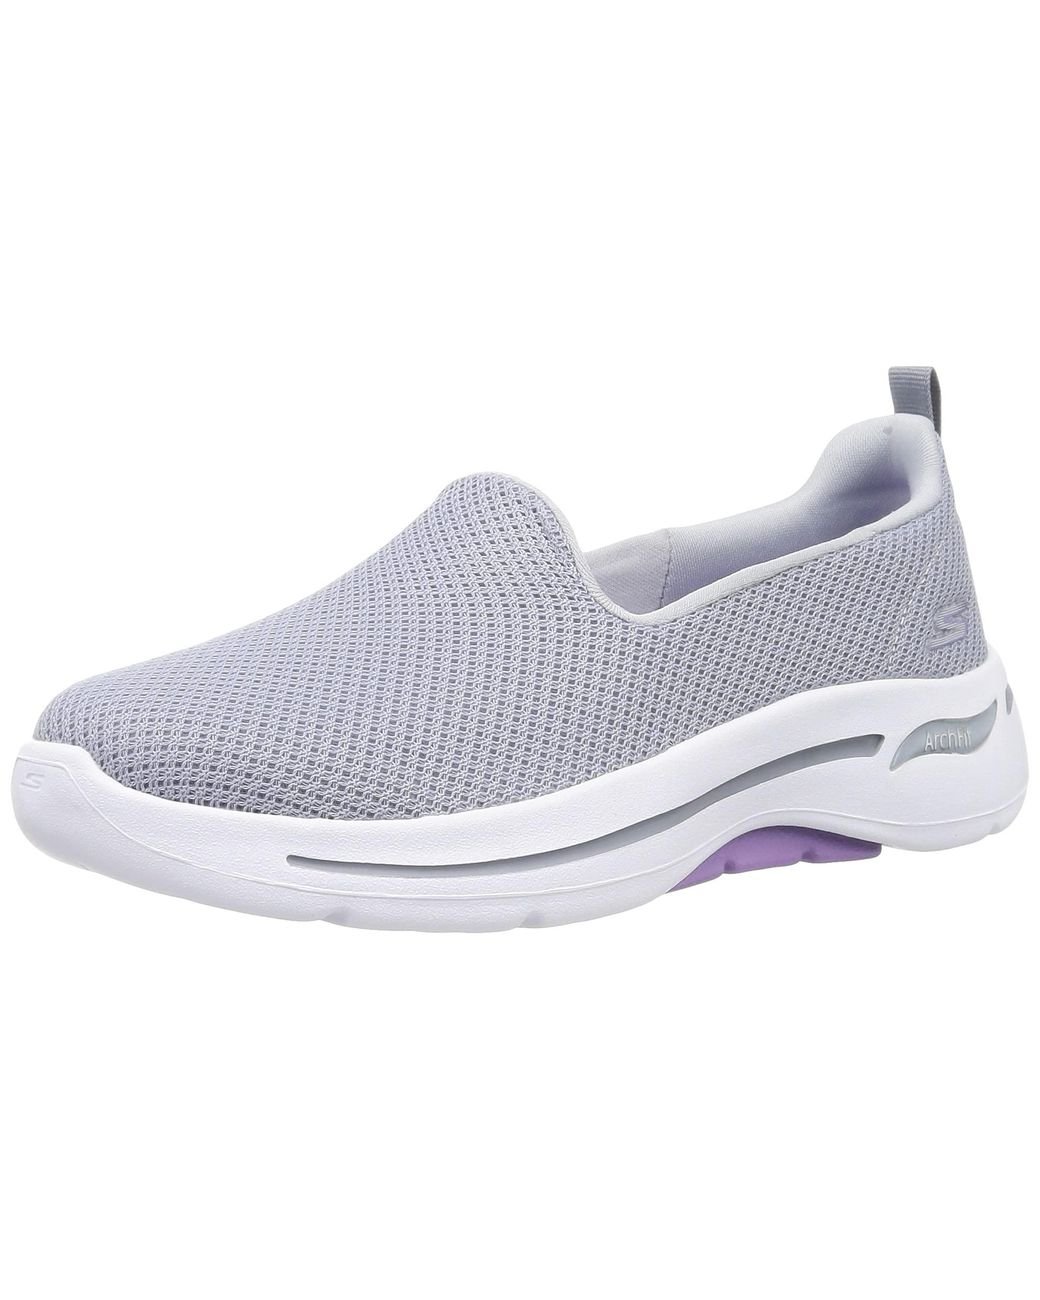 Skechers Go Walk Arch Fit-grateful Sneaker in Grey Lavender (Grey ...